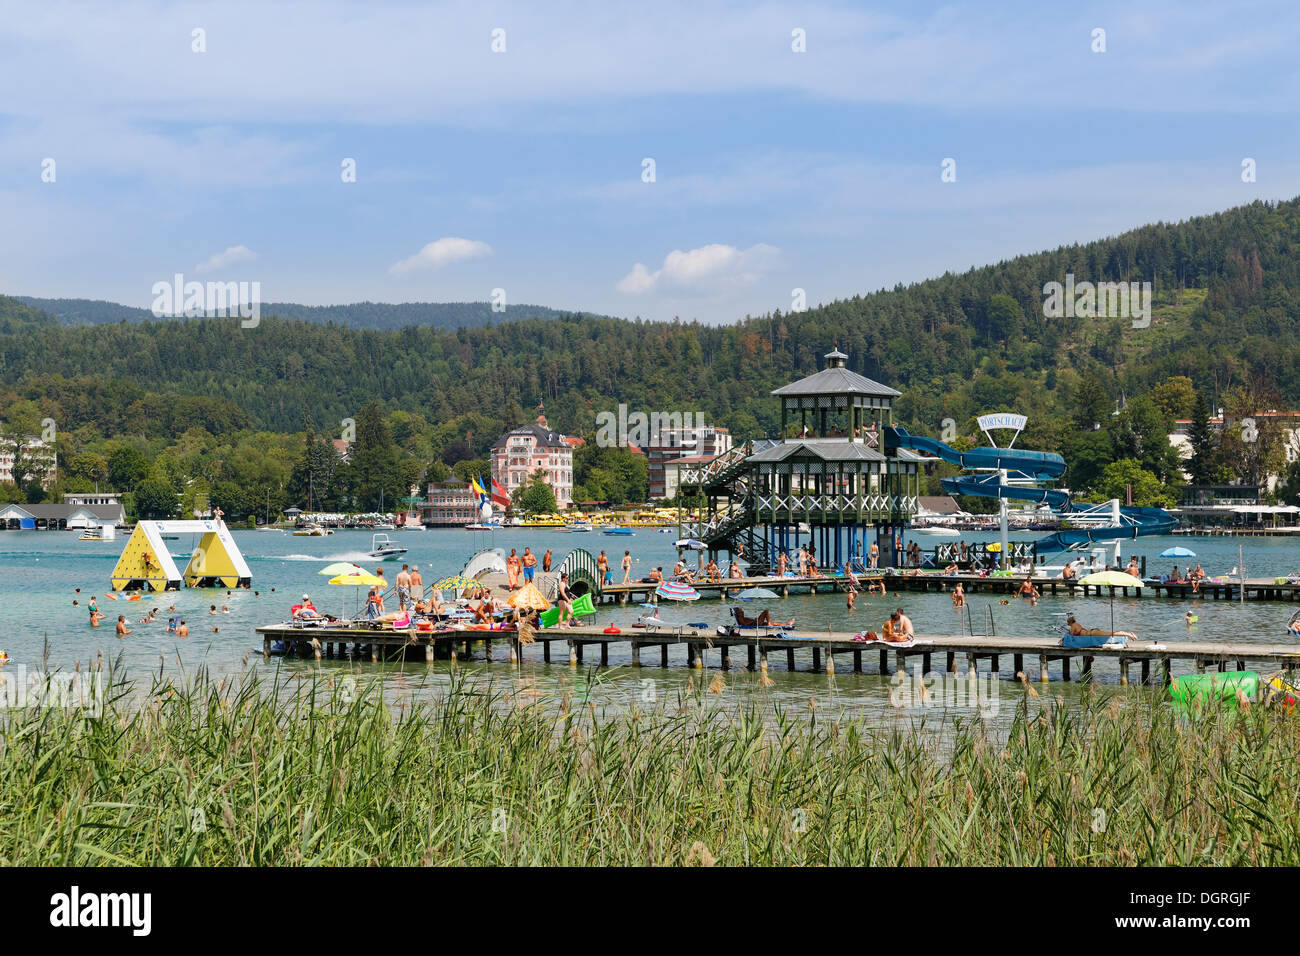 Austria, Carinthia, Portschach, People at Promenadenbad at lake Worthersee Stock Photo